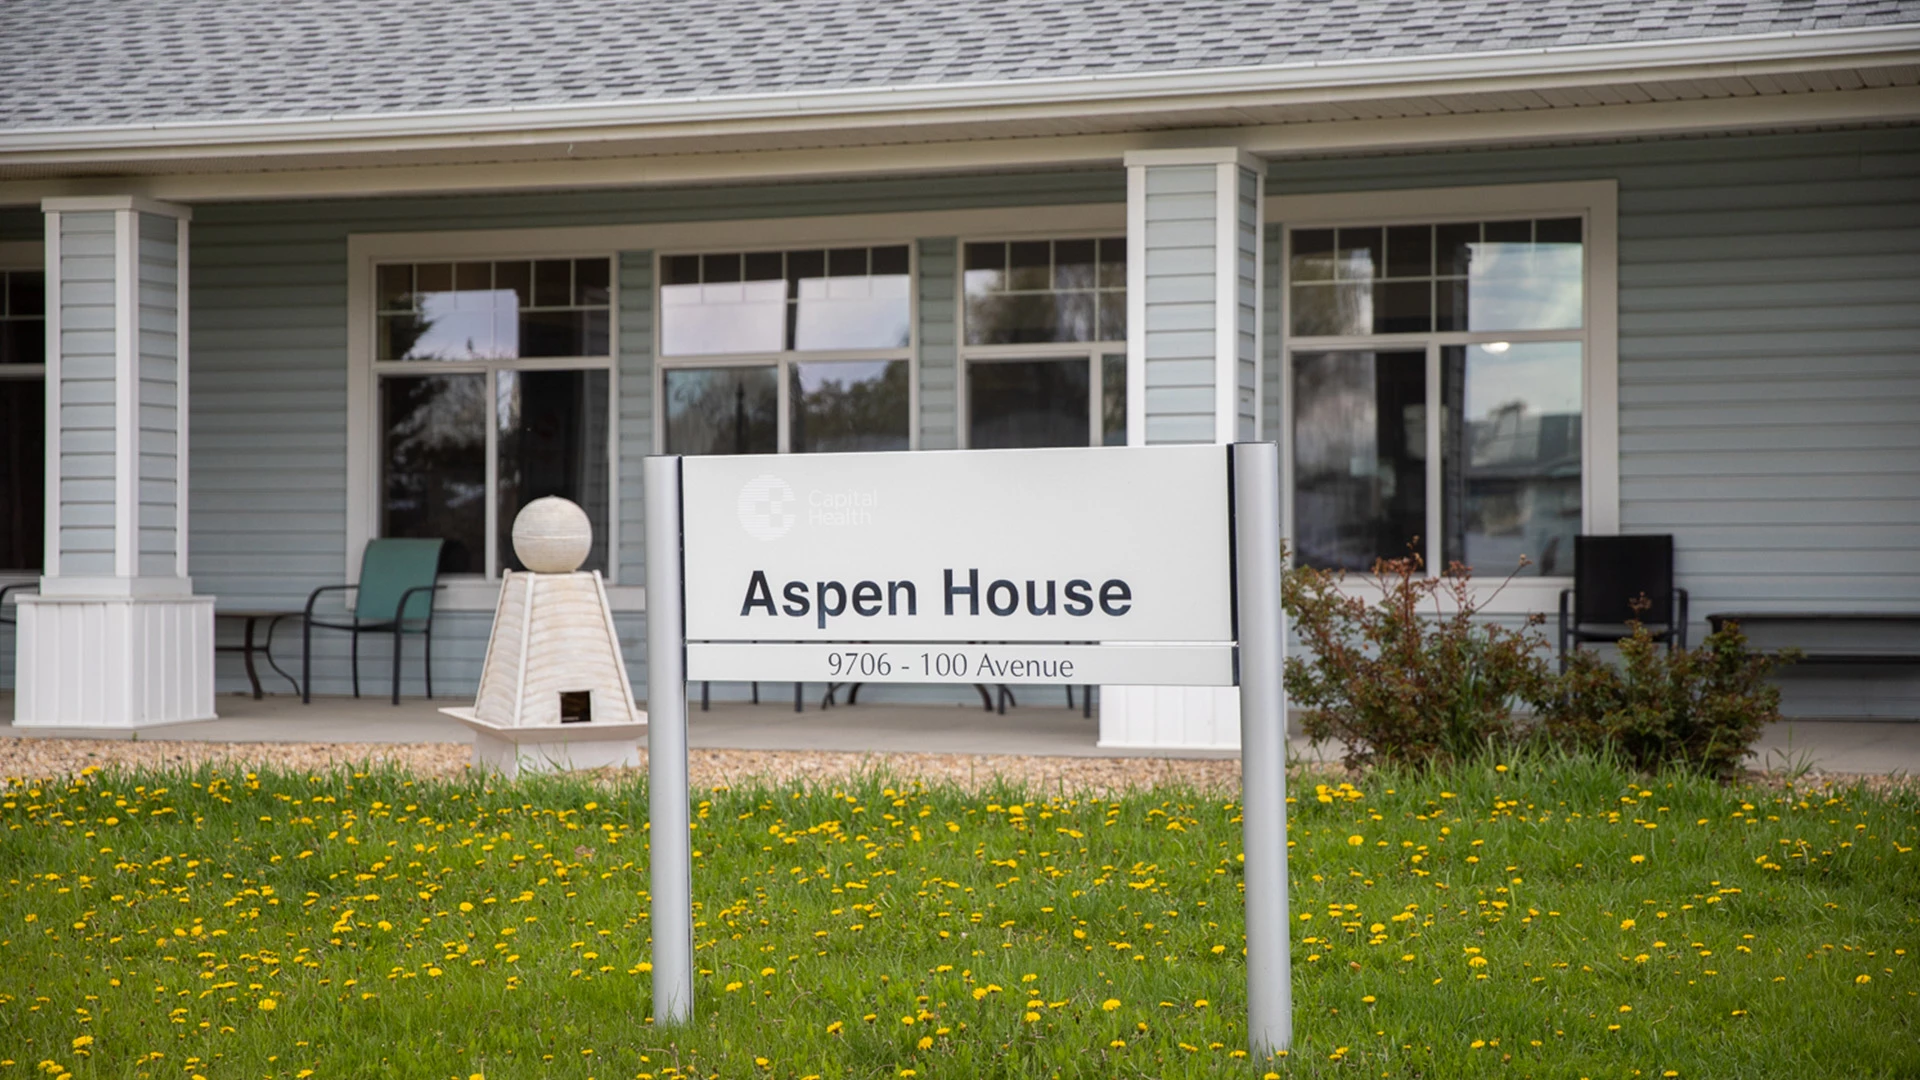 Main Entrance to Aspen House residence